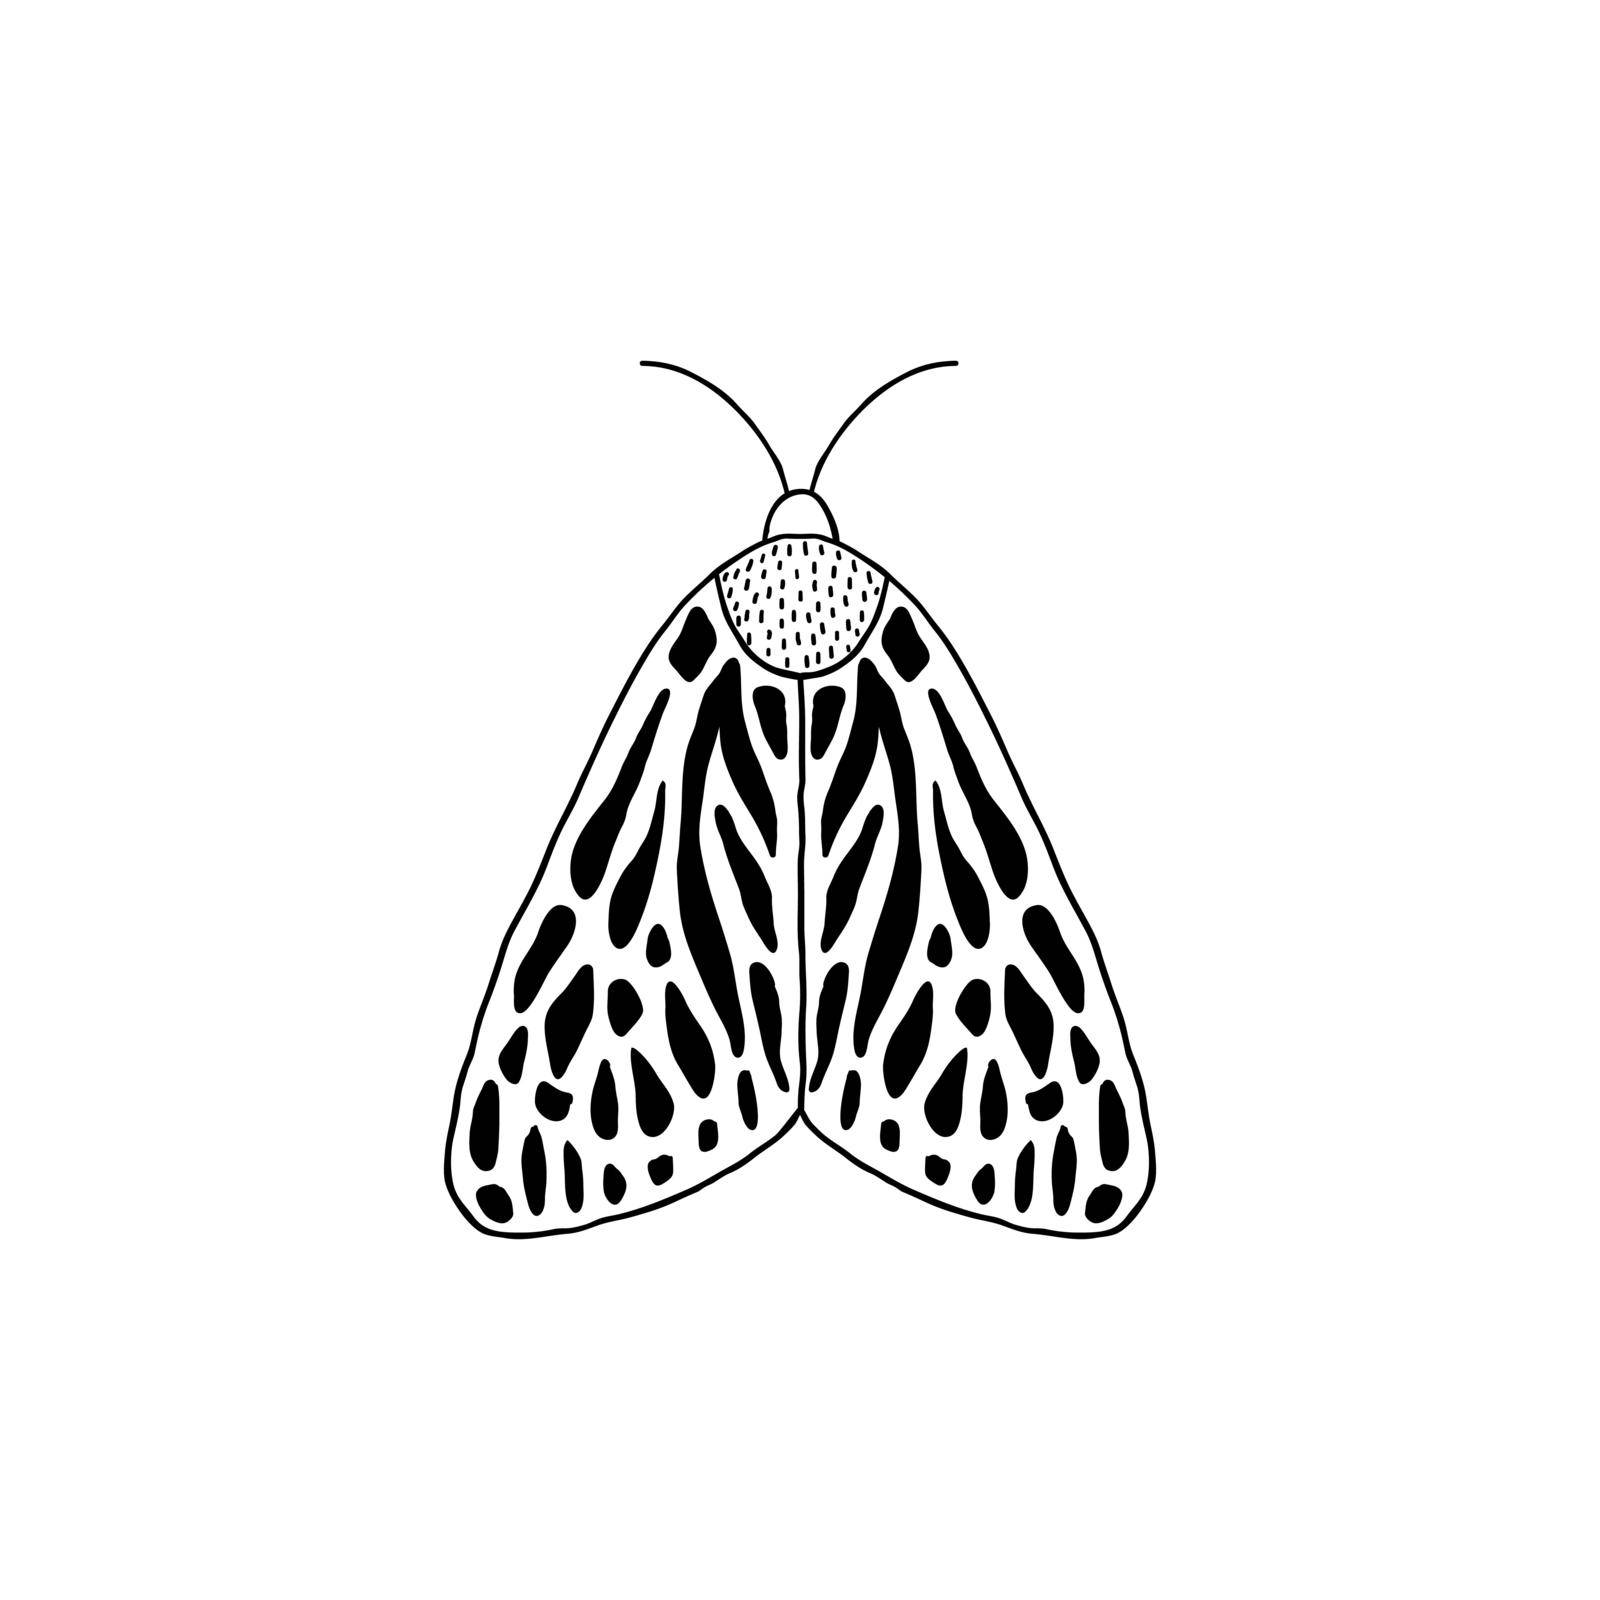 Moth in doodle style  by kiyanochka